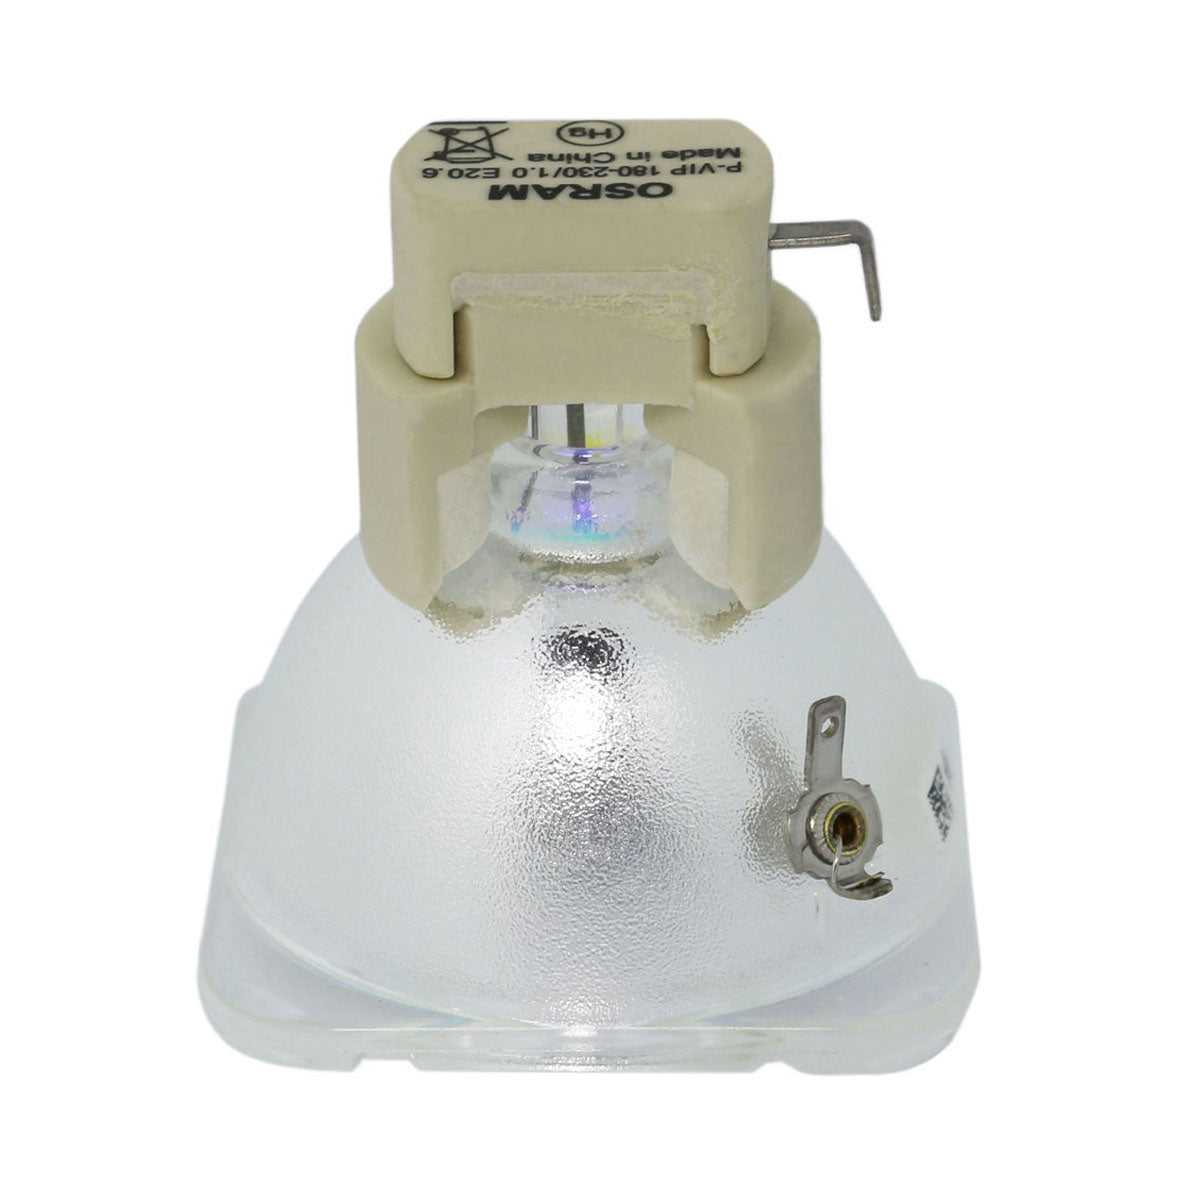 LG AL-JDT1 Osram Projector Bare Lamp